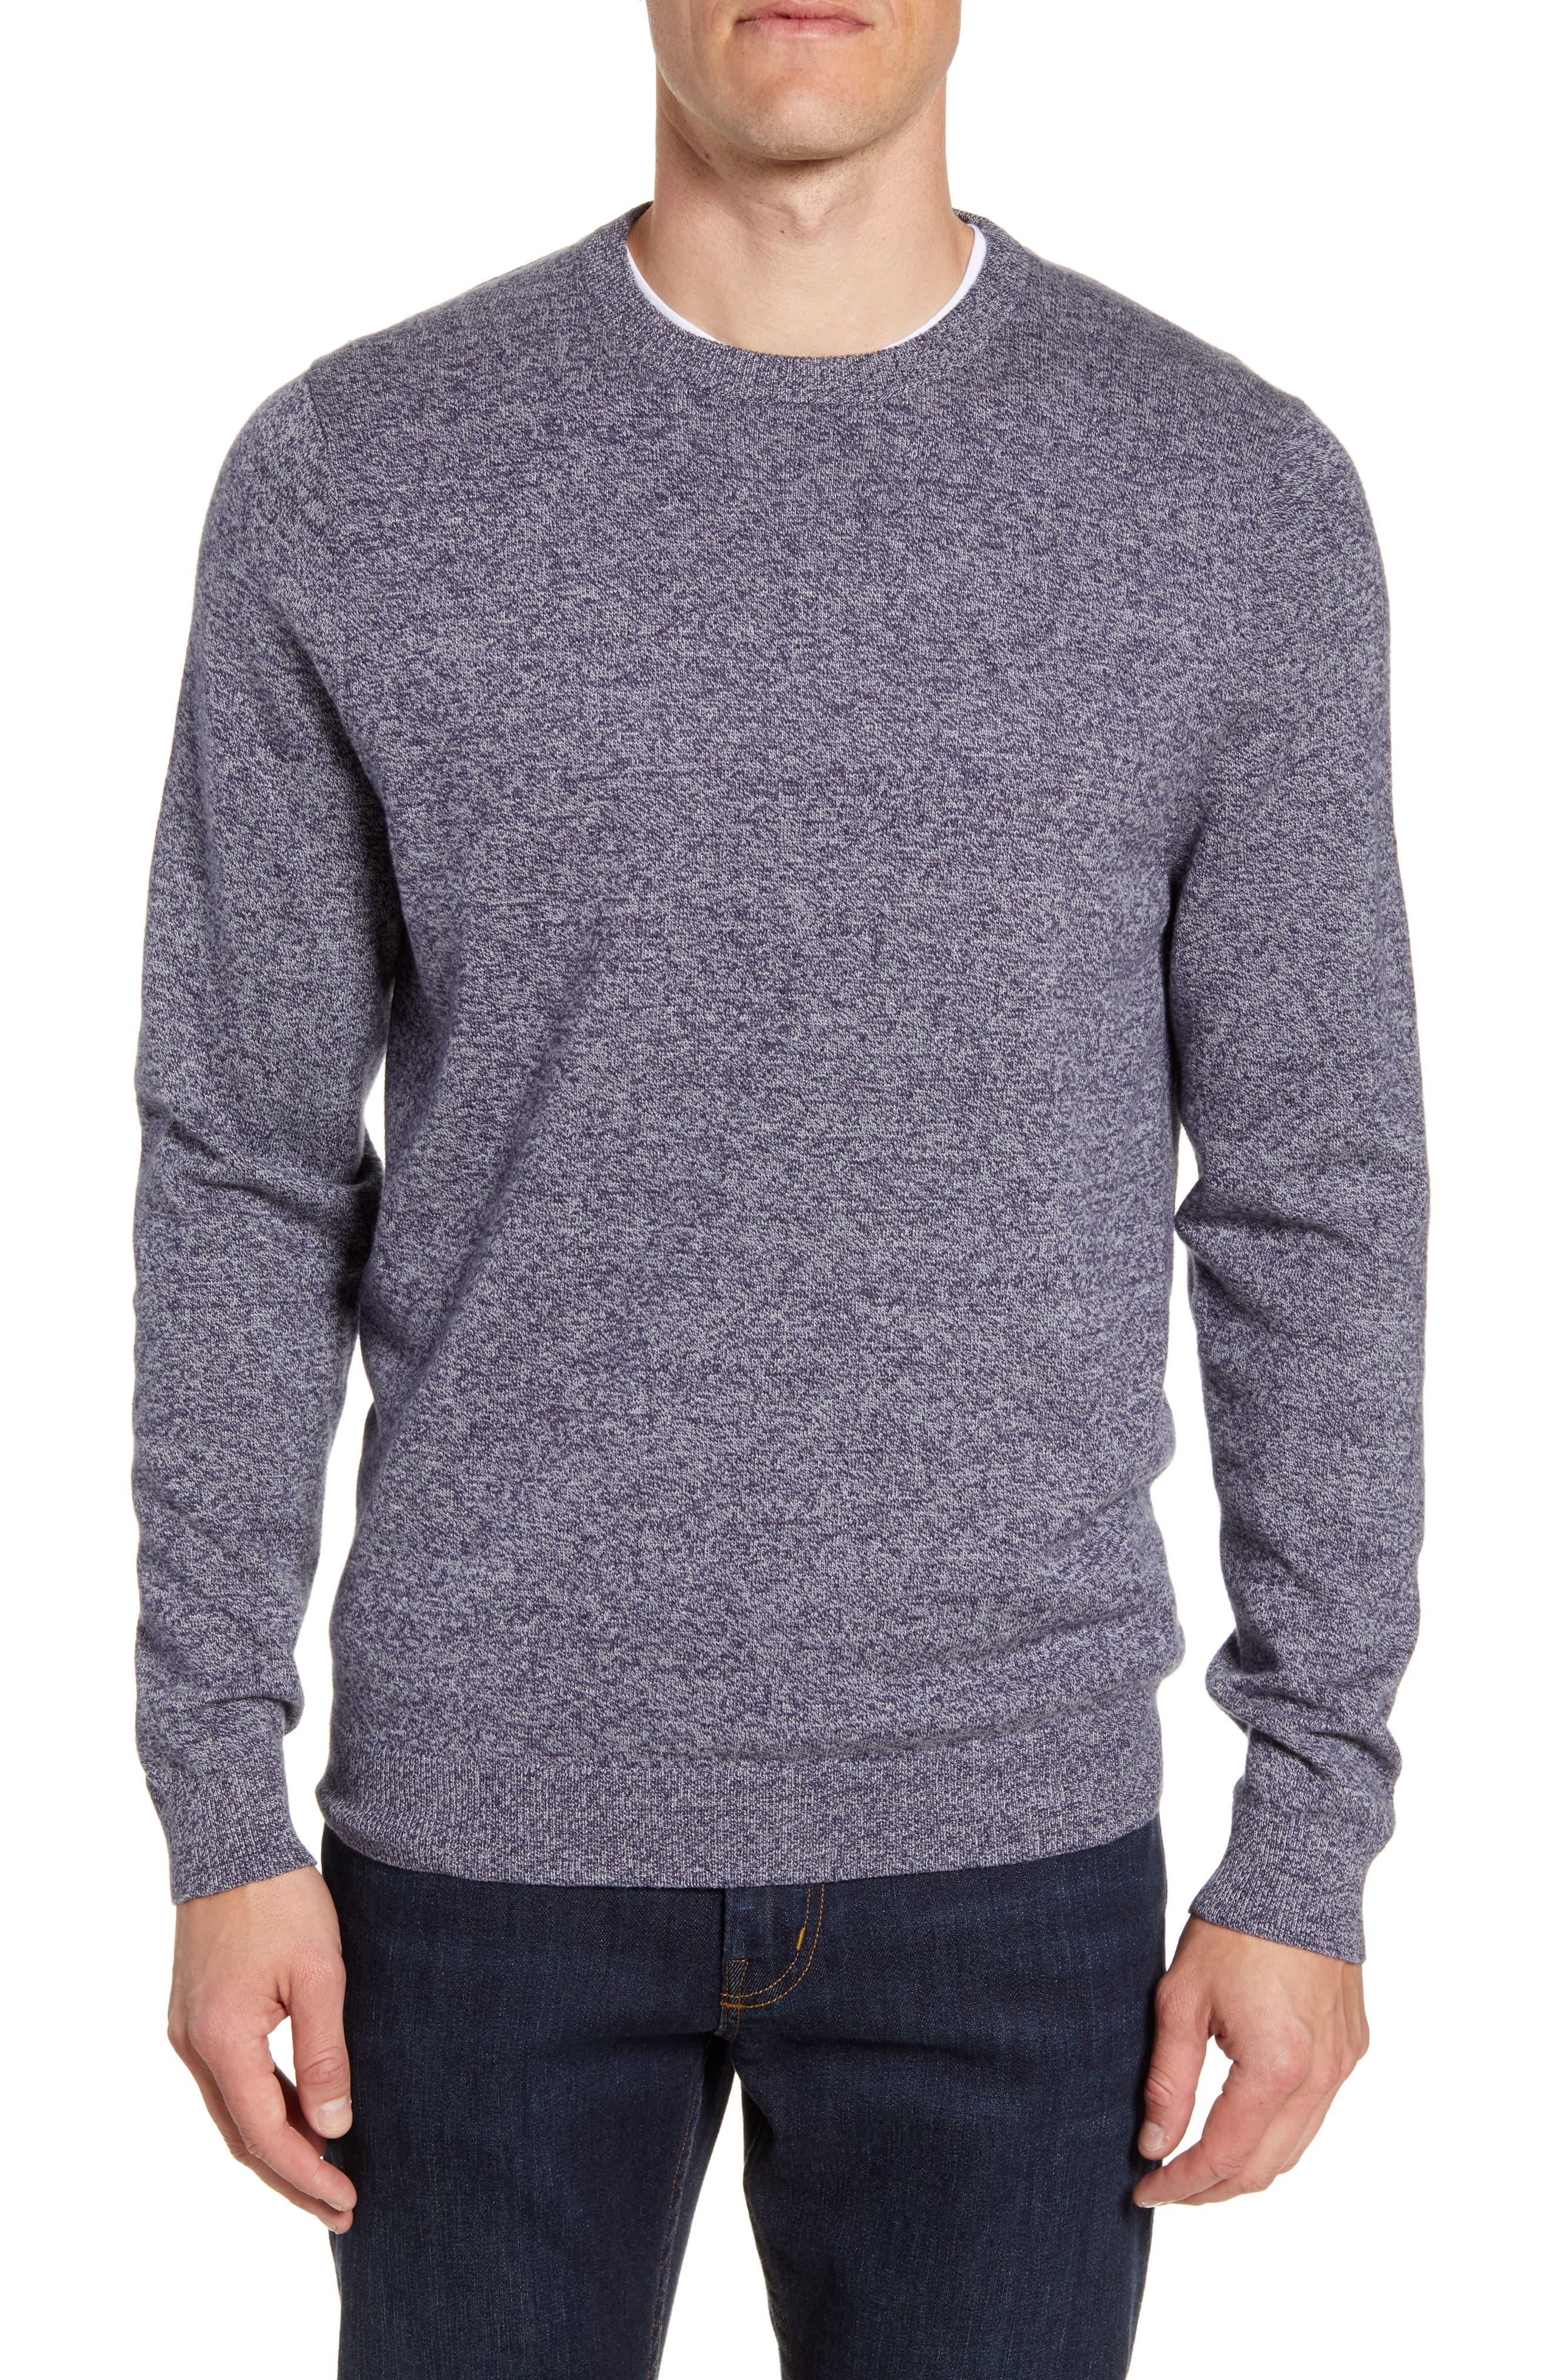 Nordstrom Cotton & Cashmere Crewneck Sweater for Men - Lyst